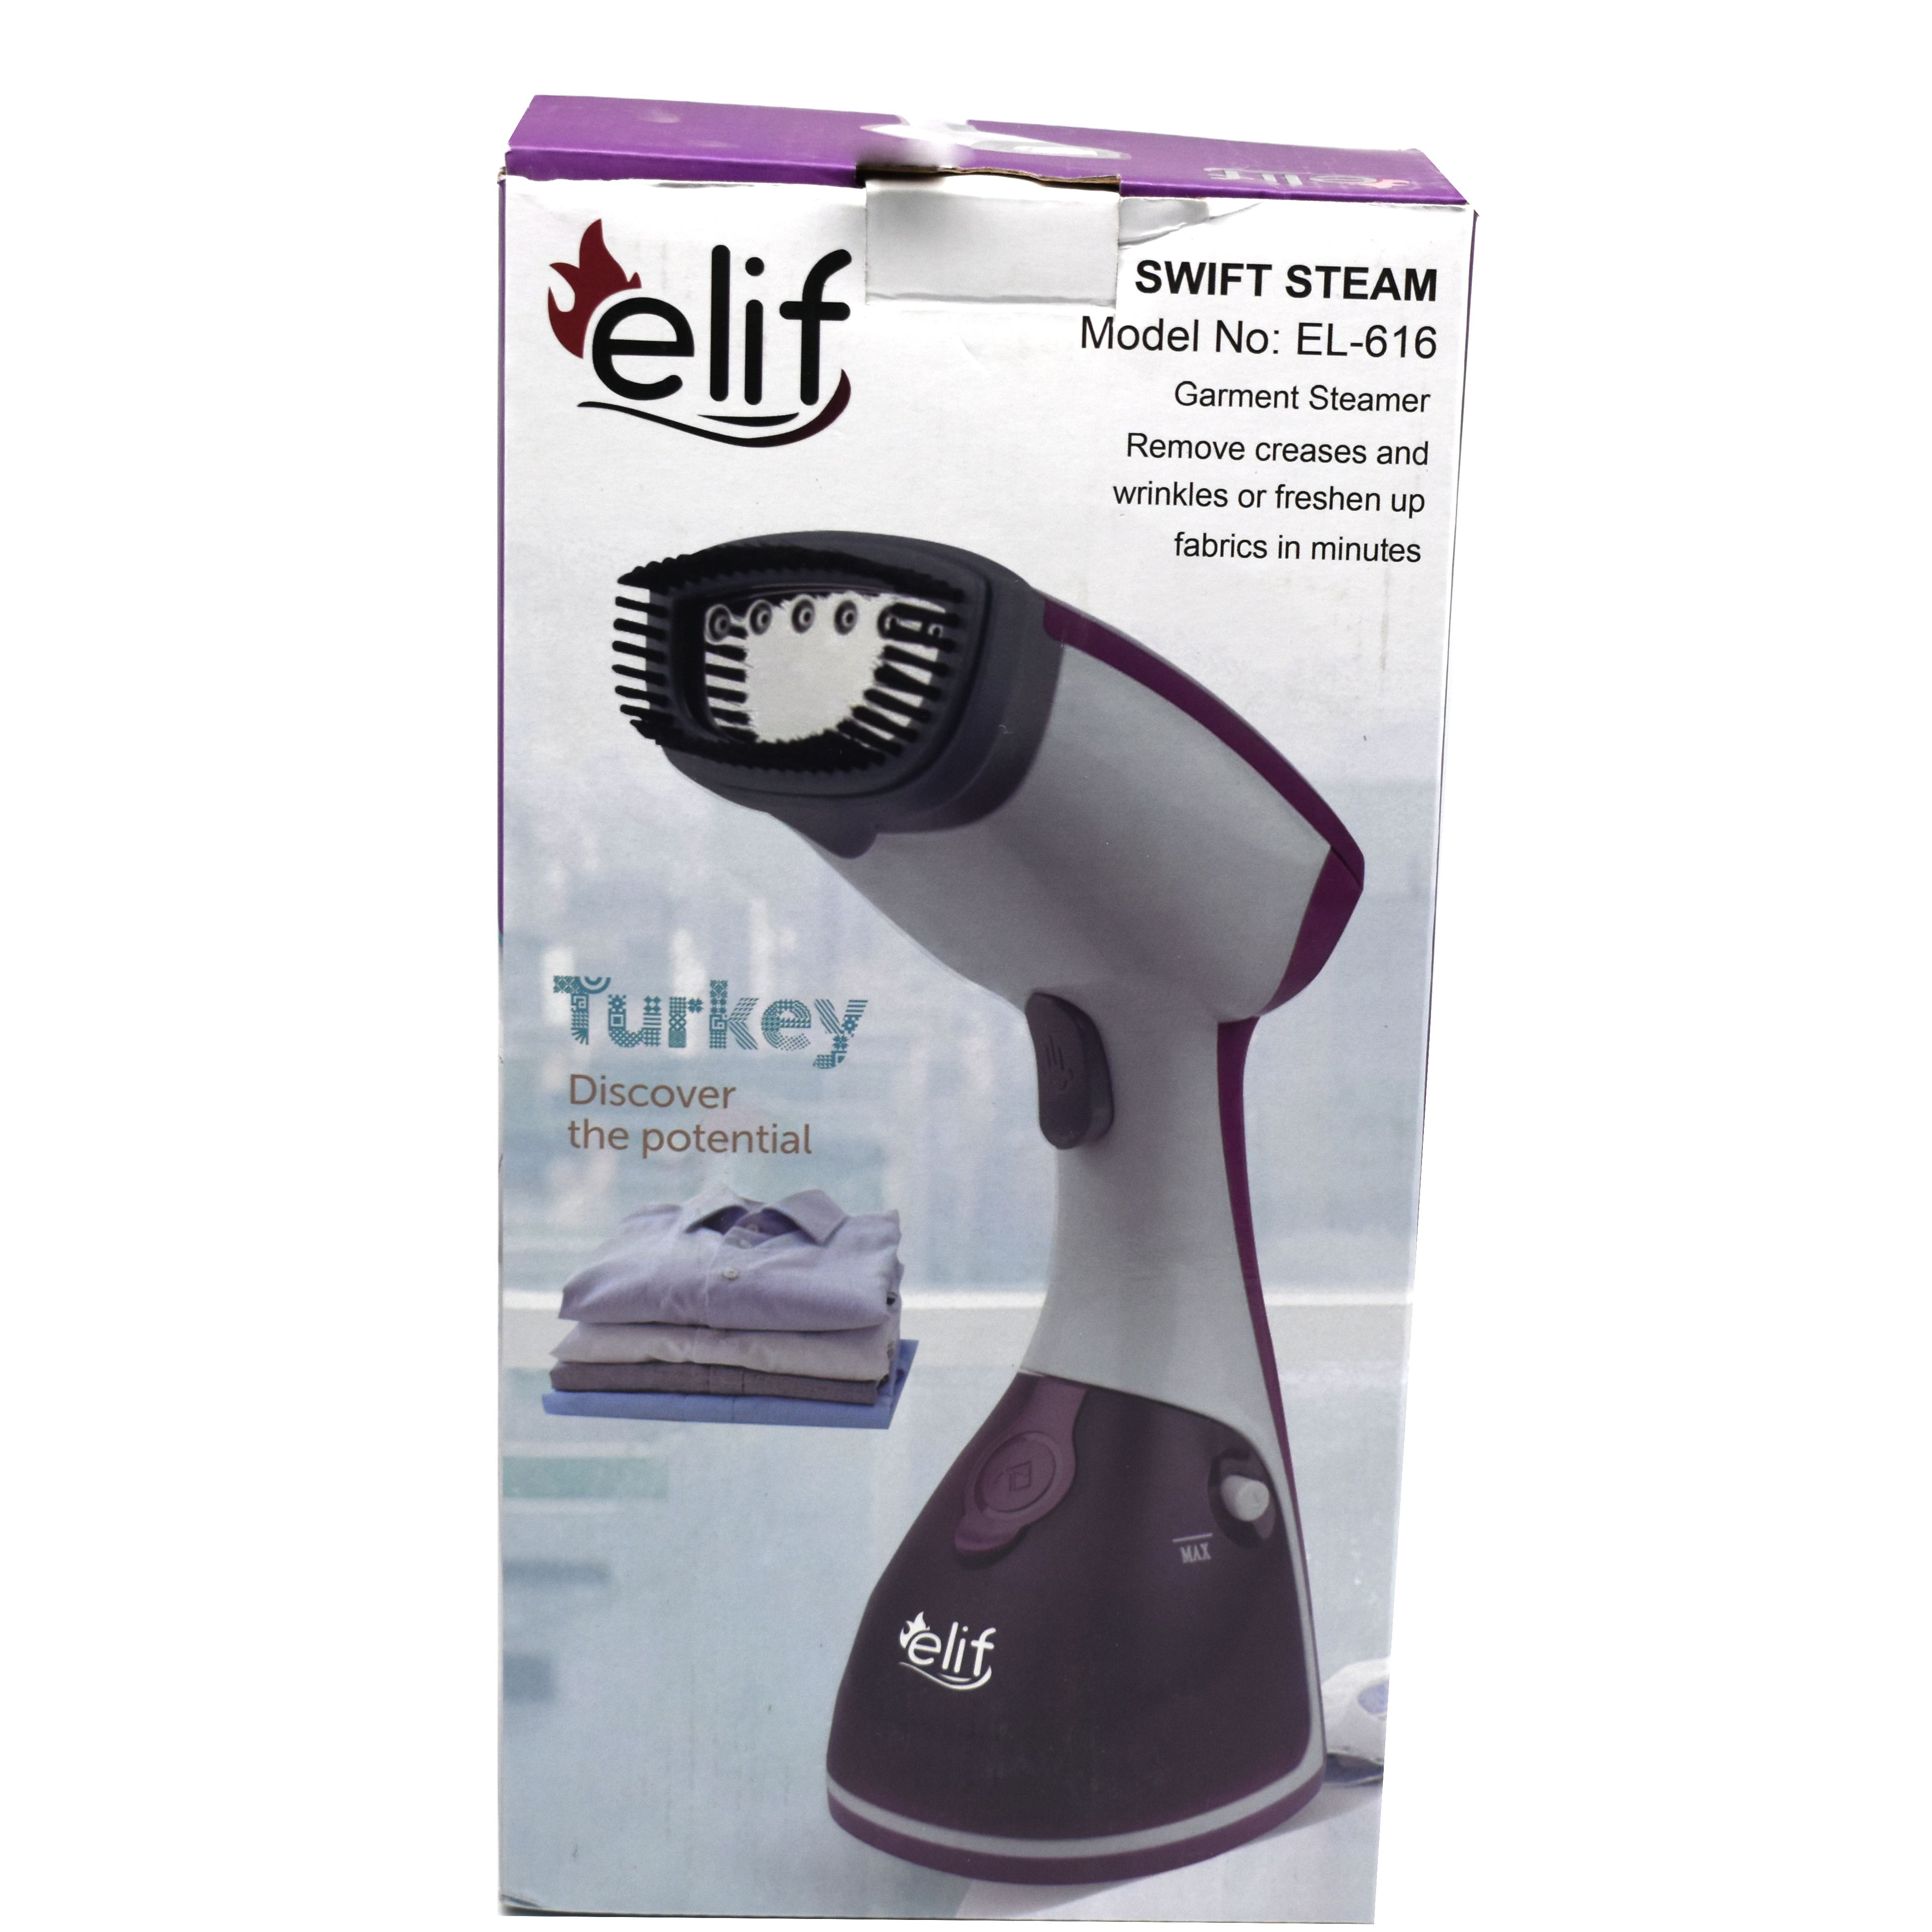 Elif-EL-616 Home Use Mini Steam ES-H20, Hand Held Garment Steamer,Small Home Appliance